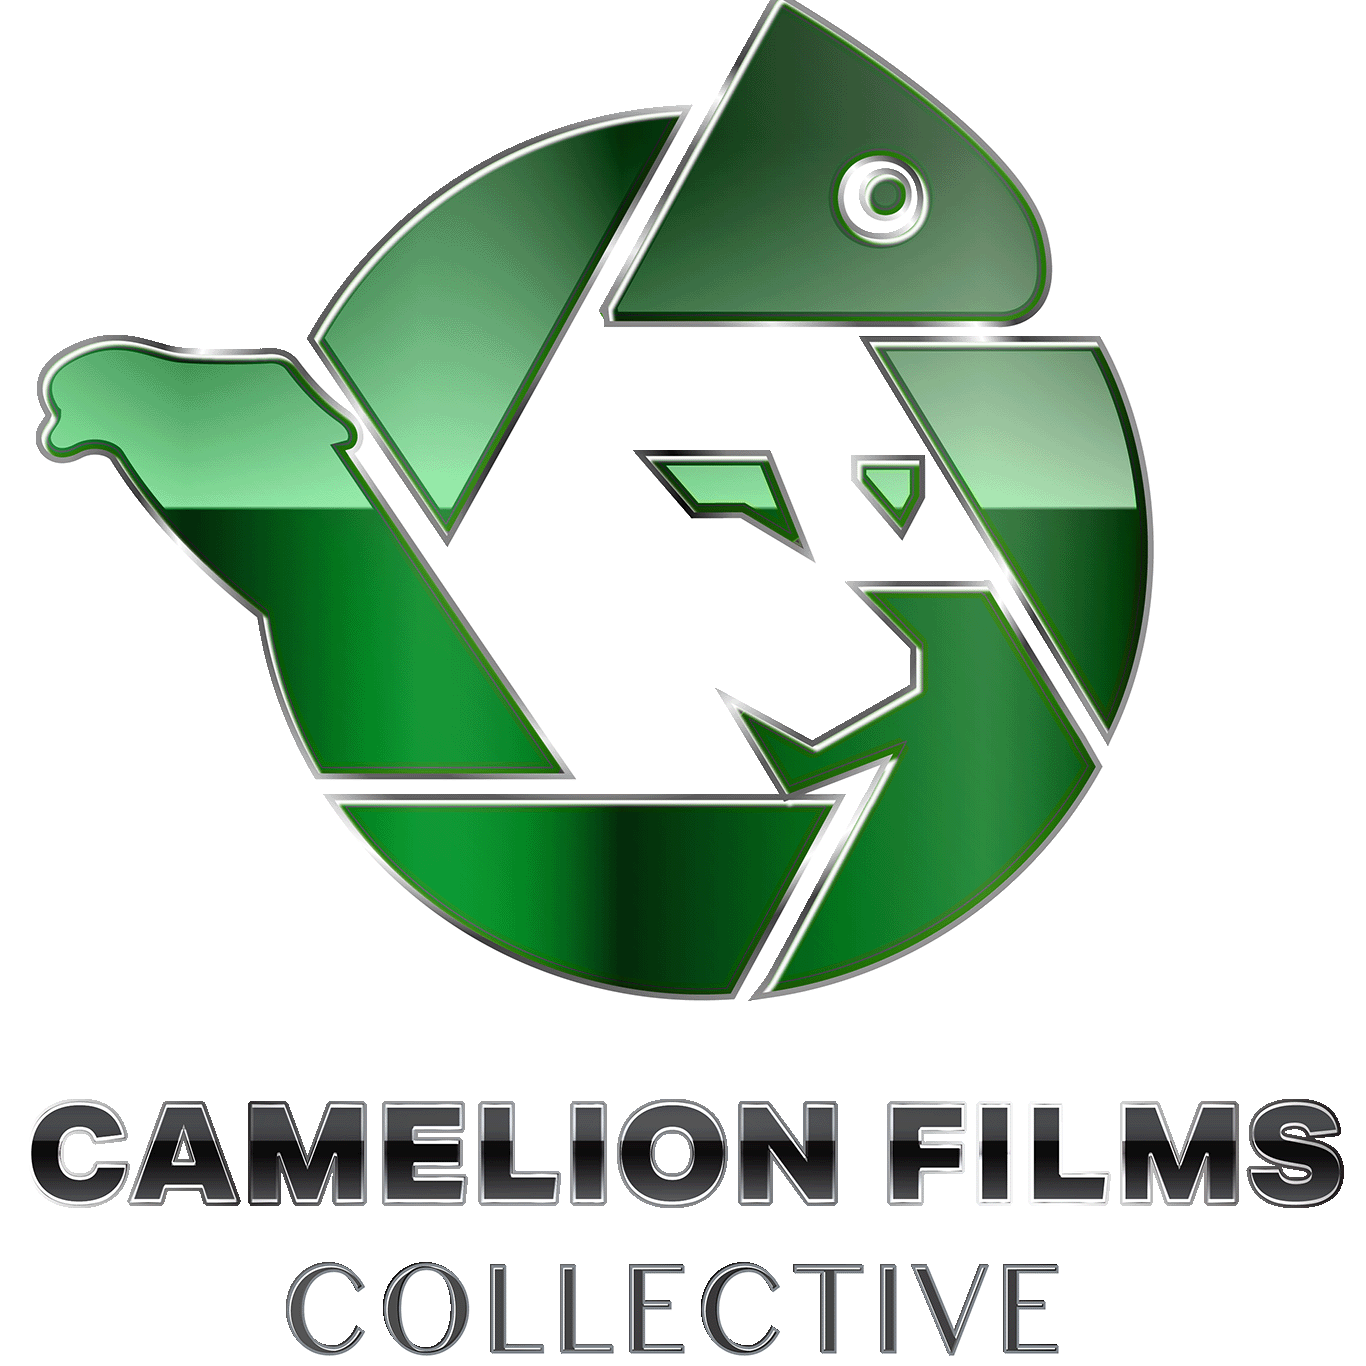 CAMELION FILMS - Filmmaker Collective based in Munich